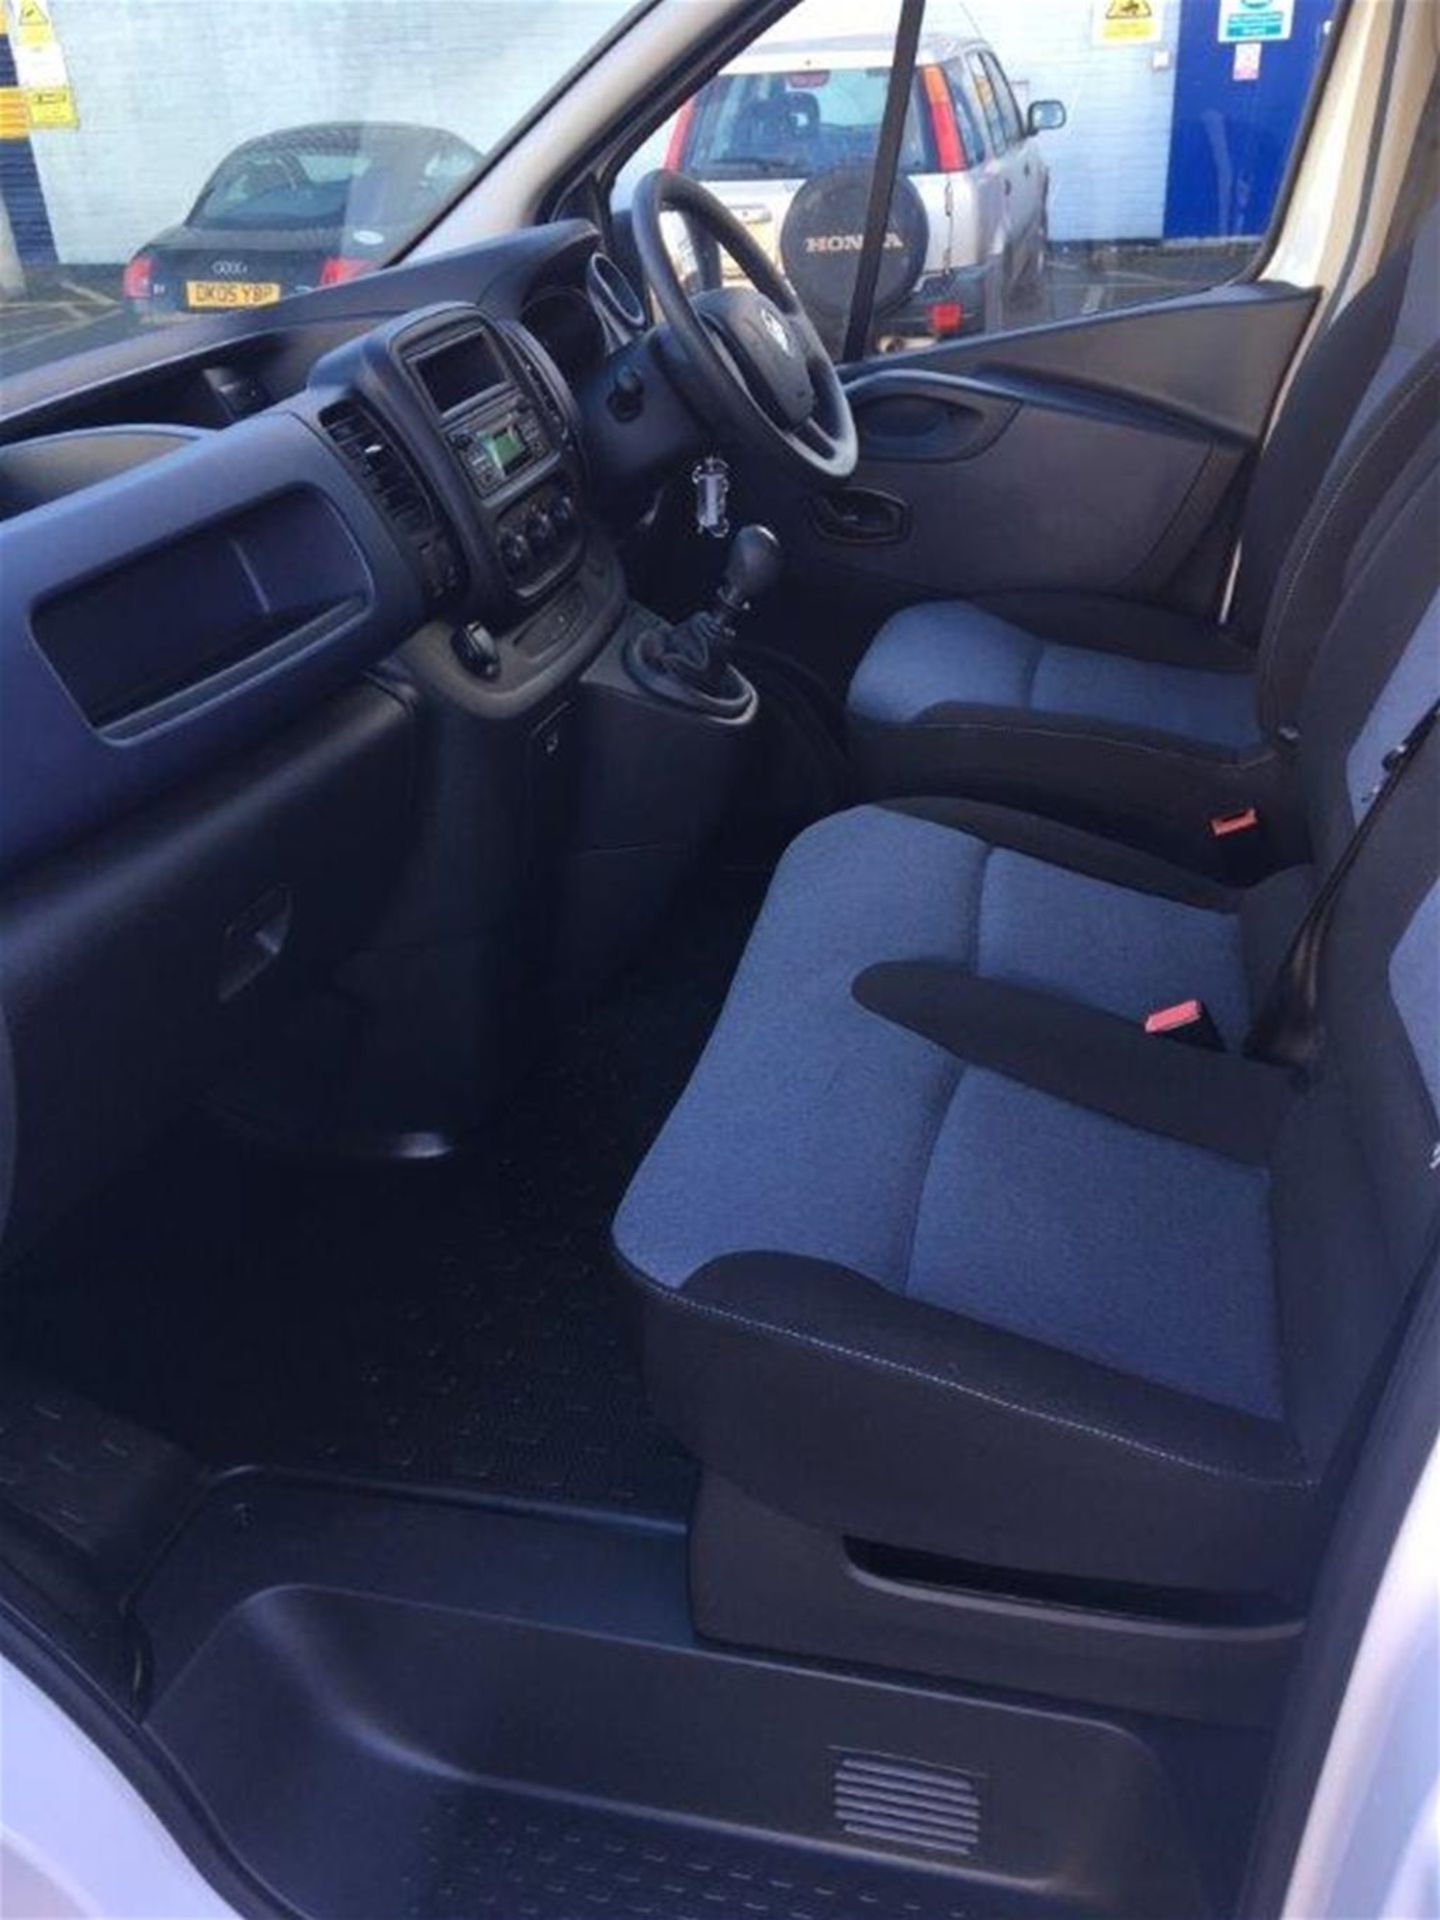 Vauxhall Vivaro L1:H1 1.6 CDTi 115ps 2.7t Panel Van - Image 8 of 10